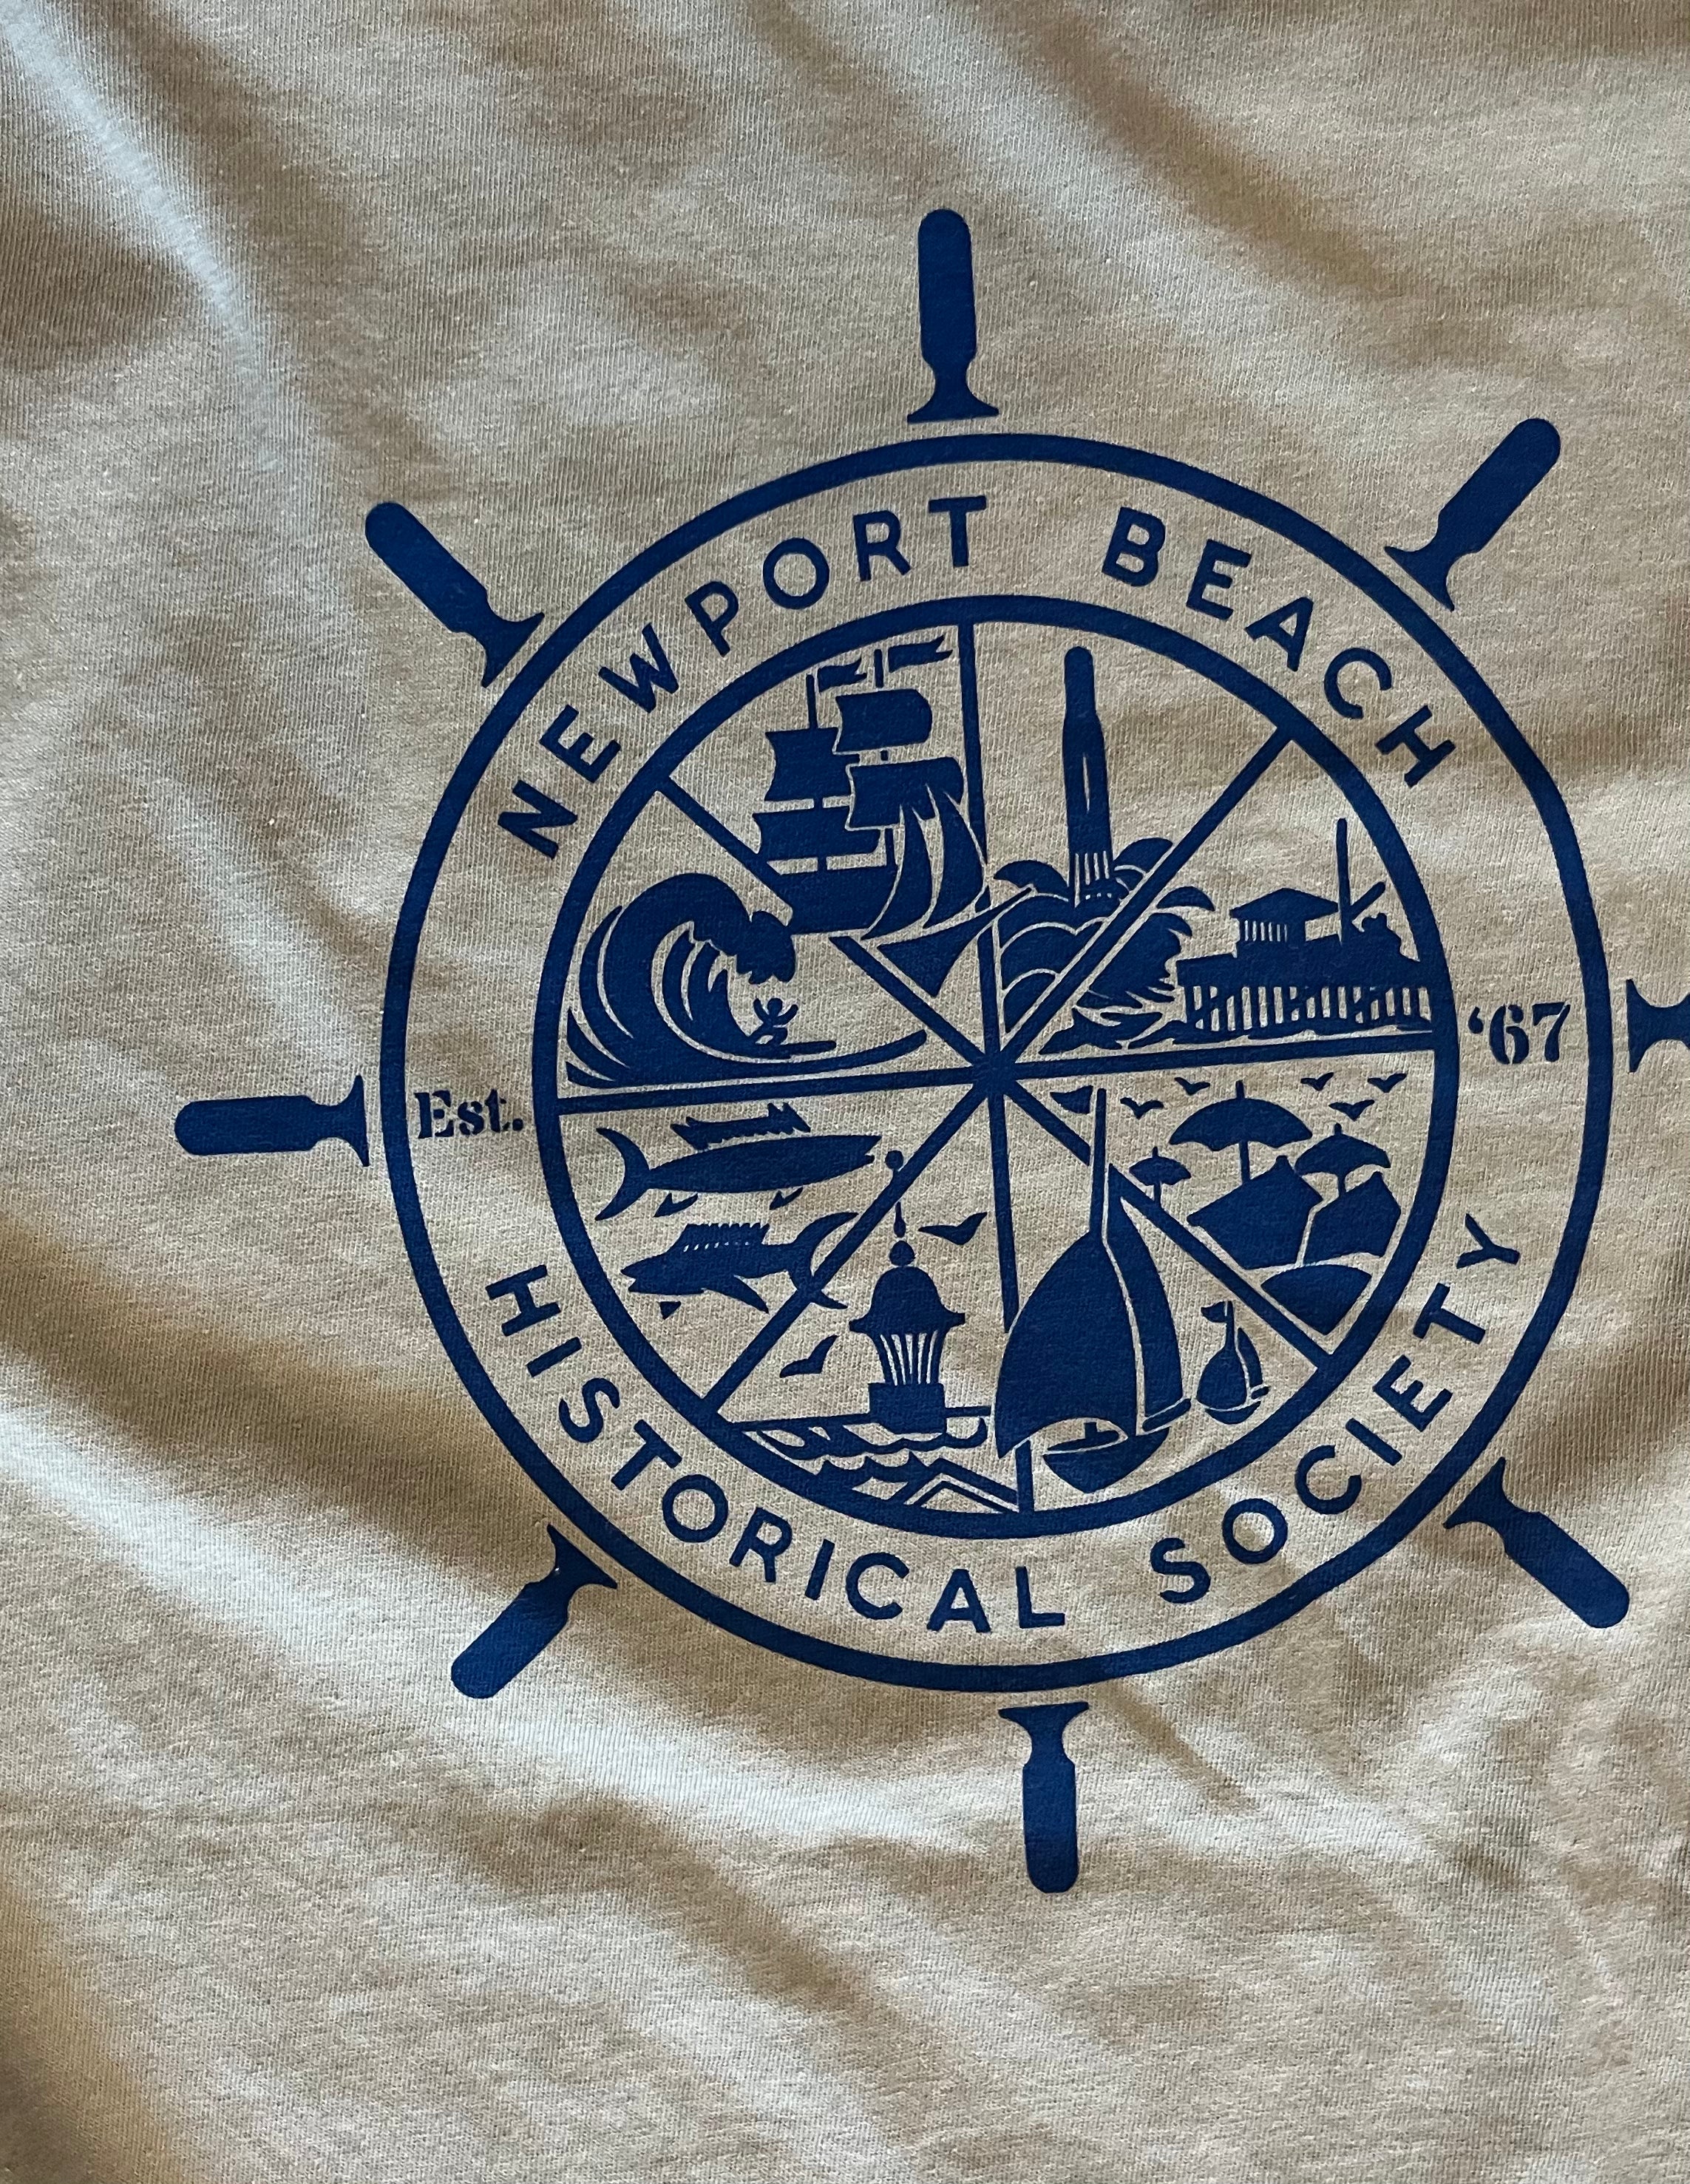 Newport Beach Historical Society Long Sleeve T-Shirt Khaki Green